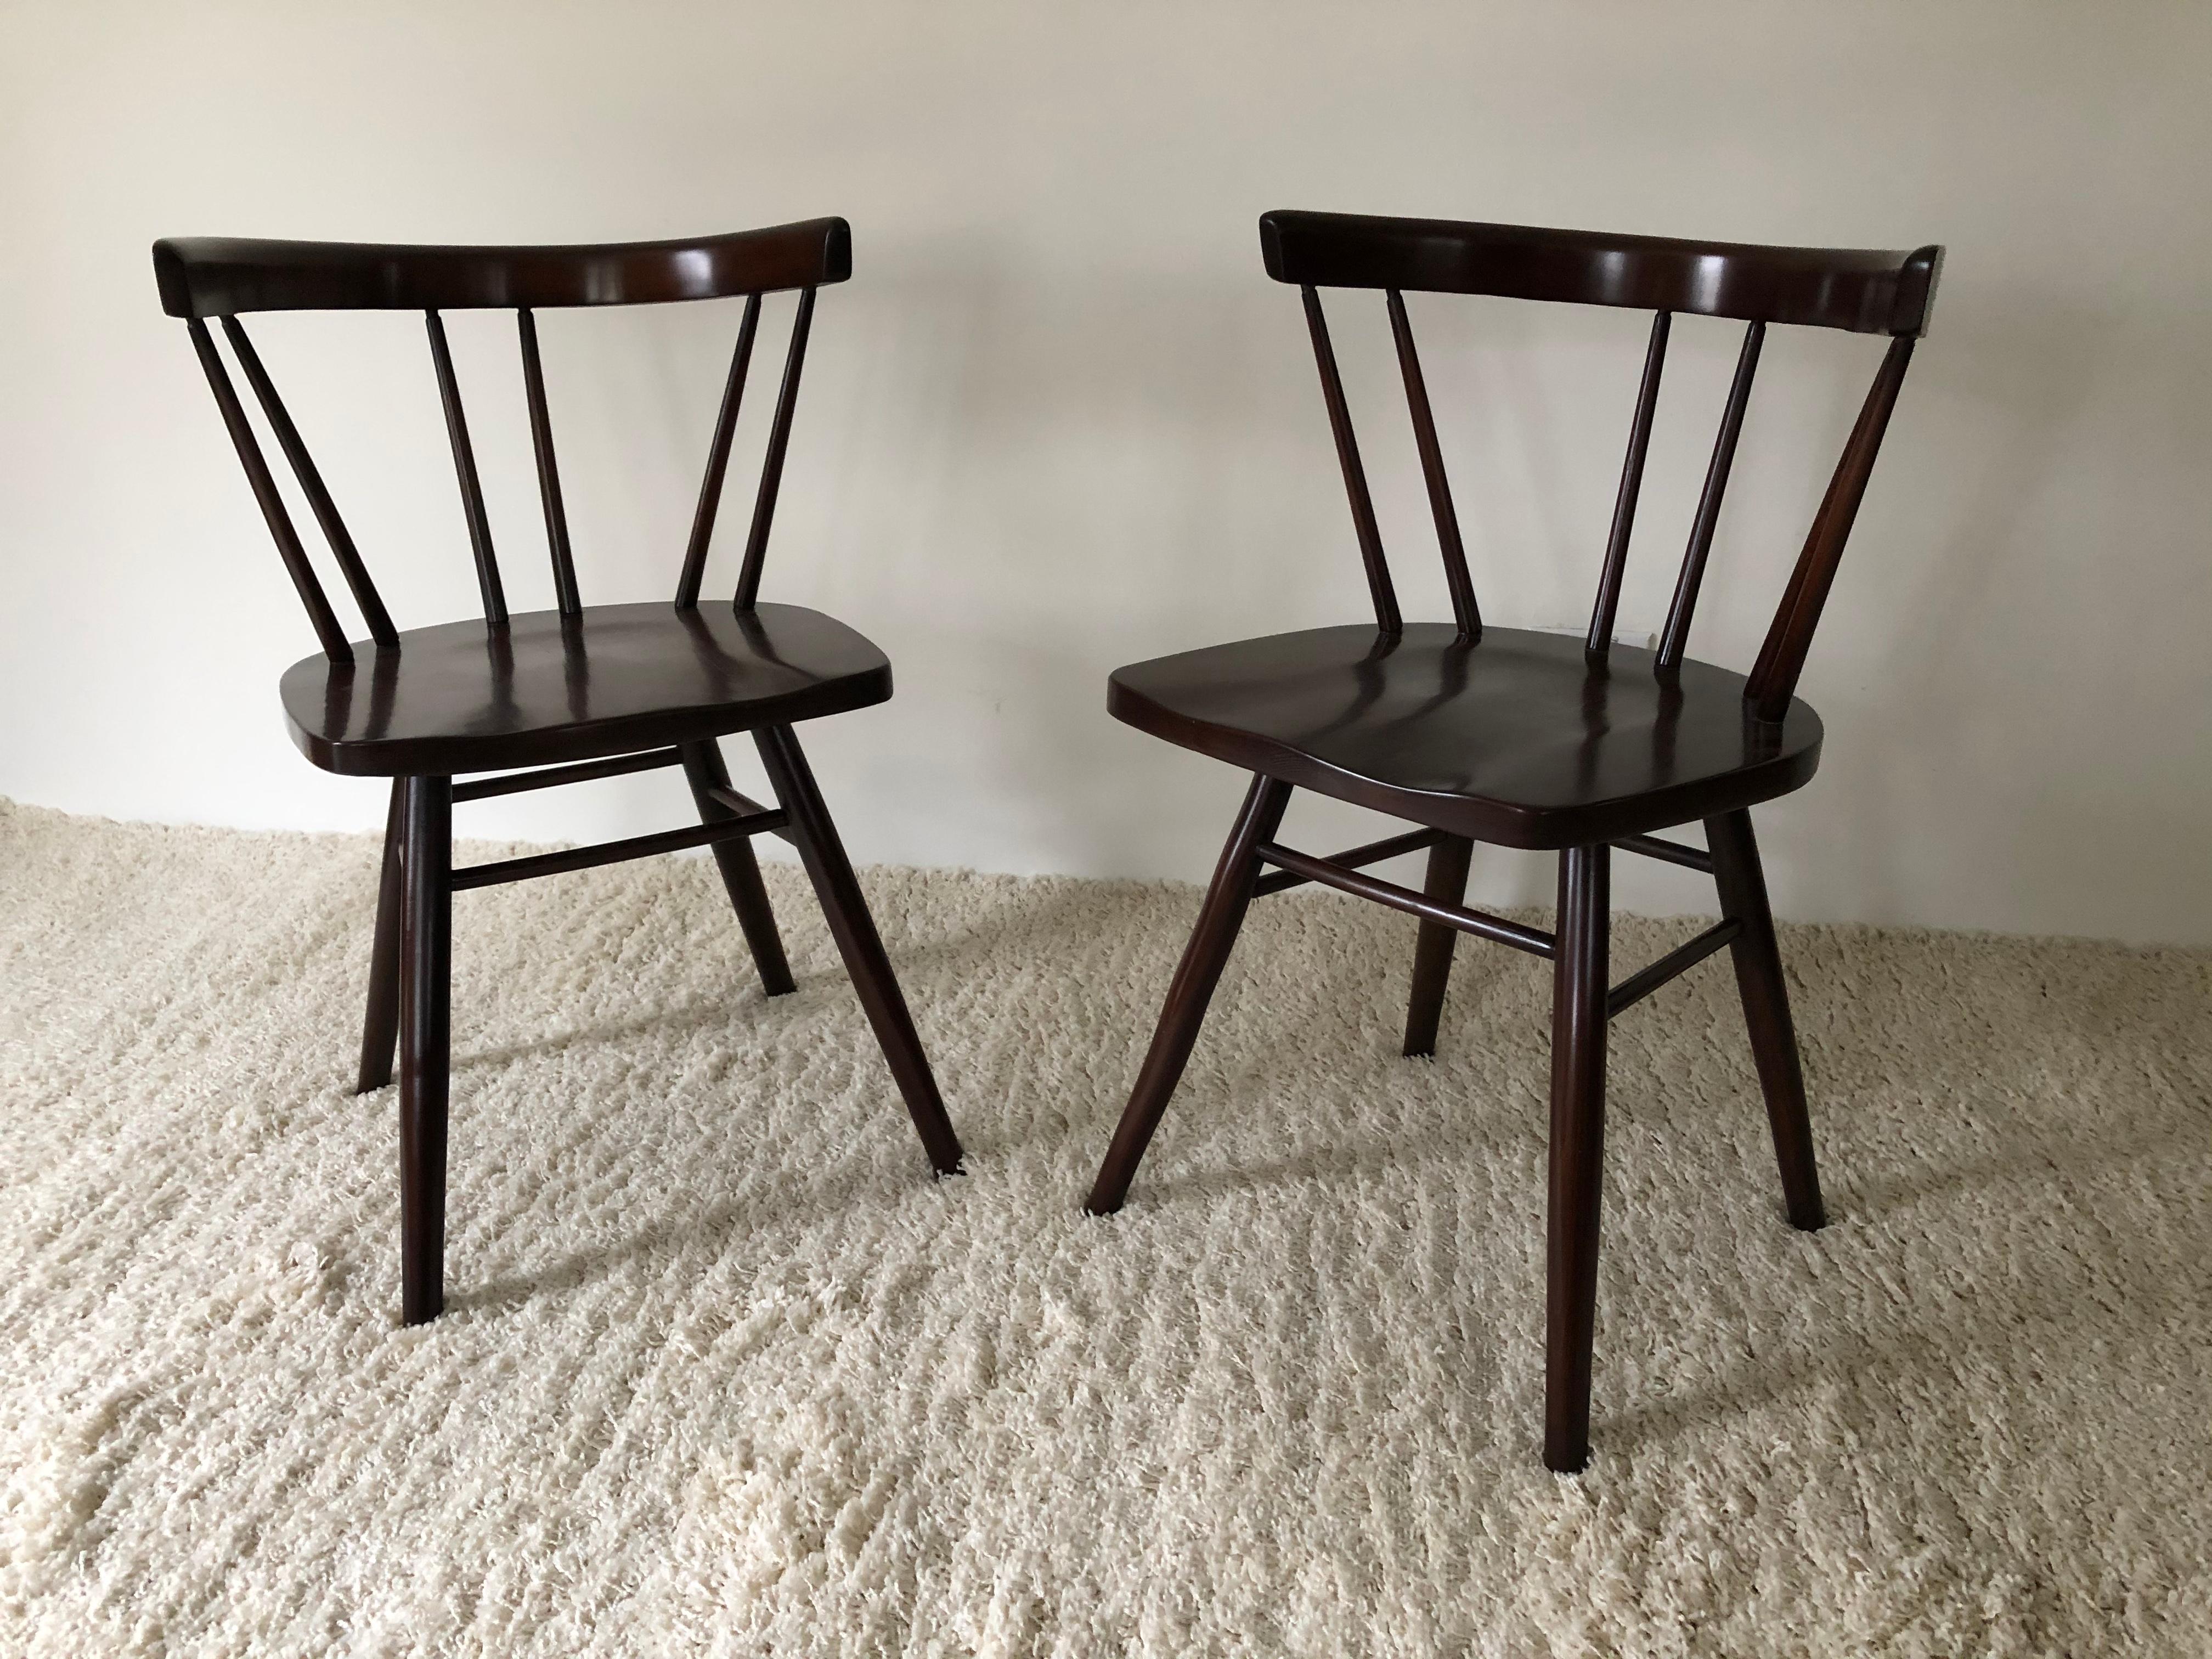 Pair of George Nakashima style walnut midcentury chairs.